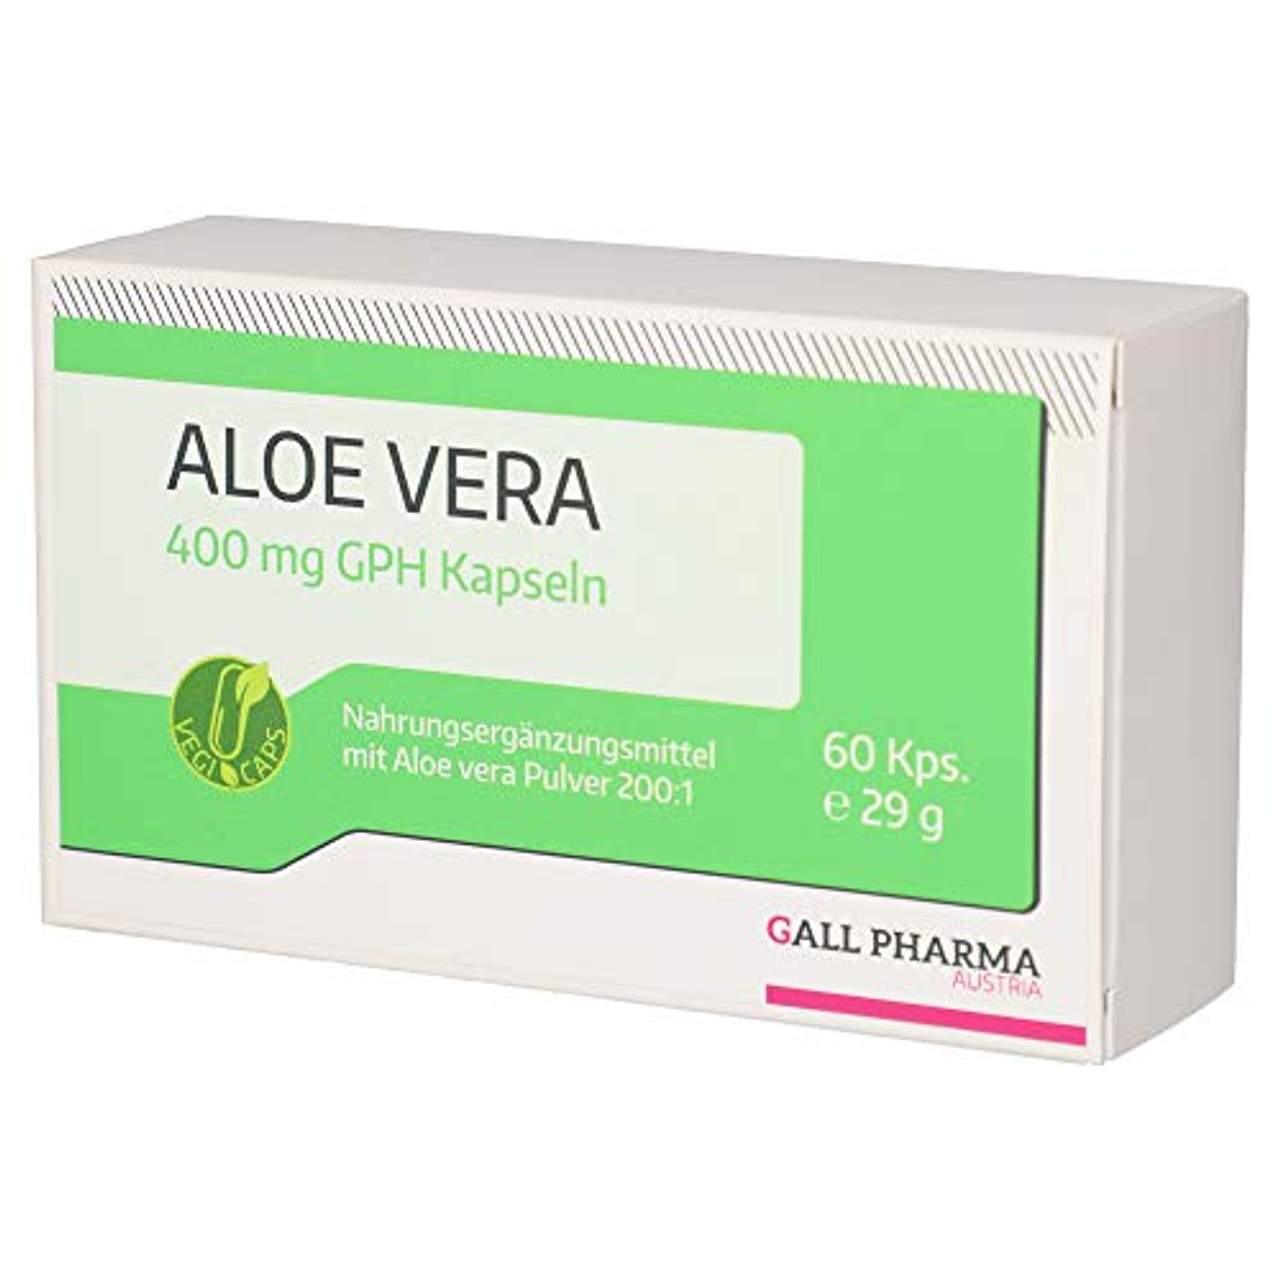 Gall Pharma Aloe vera 400 mg GPH Kapseln